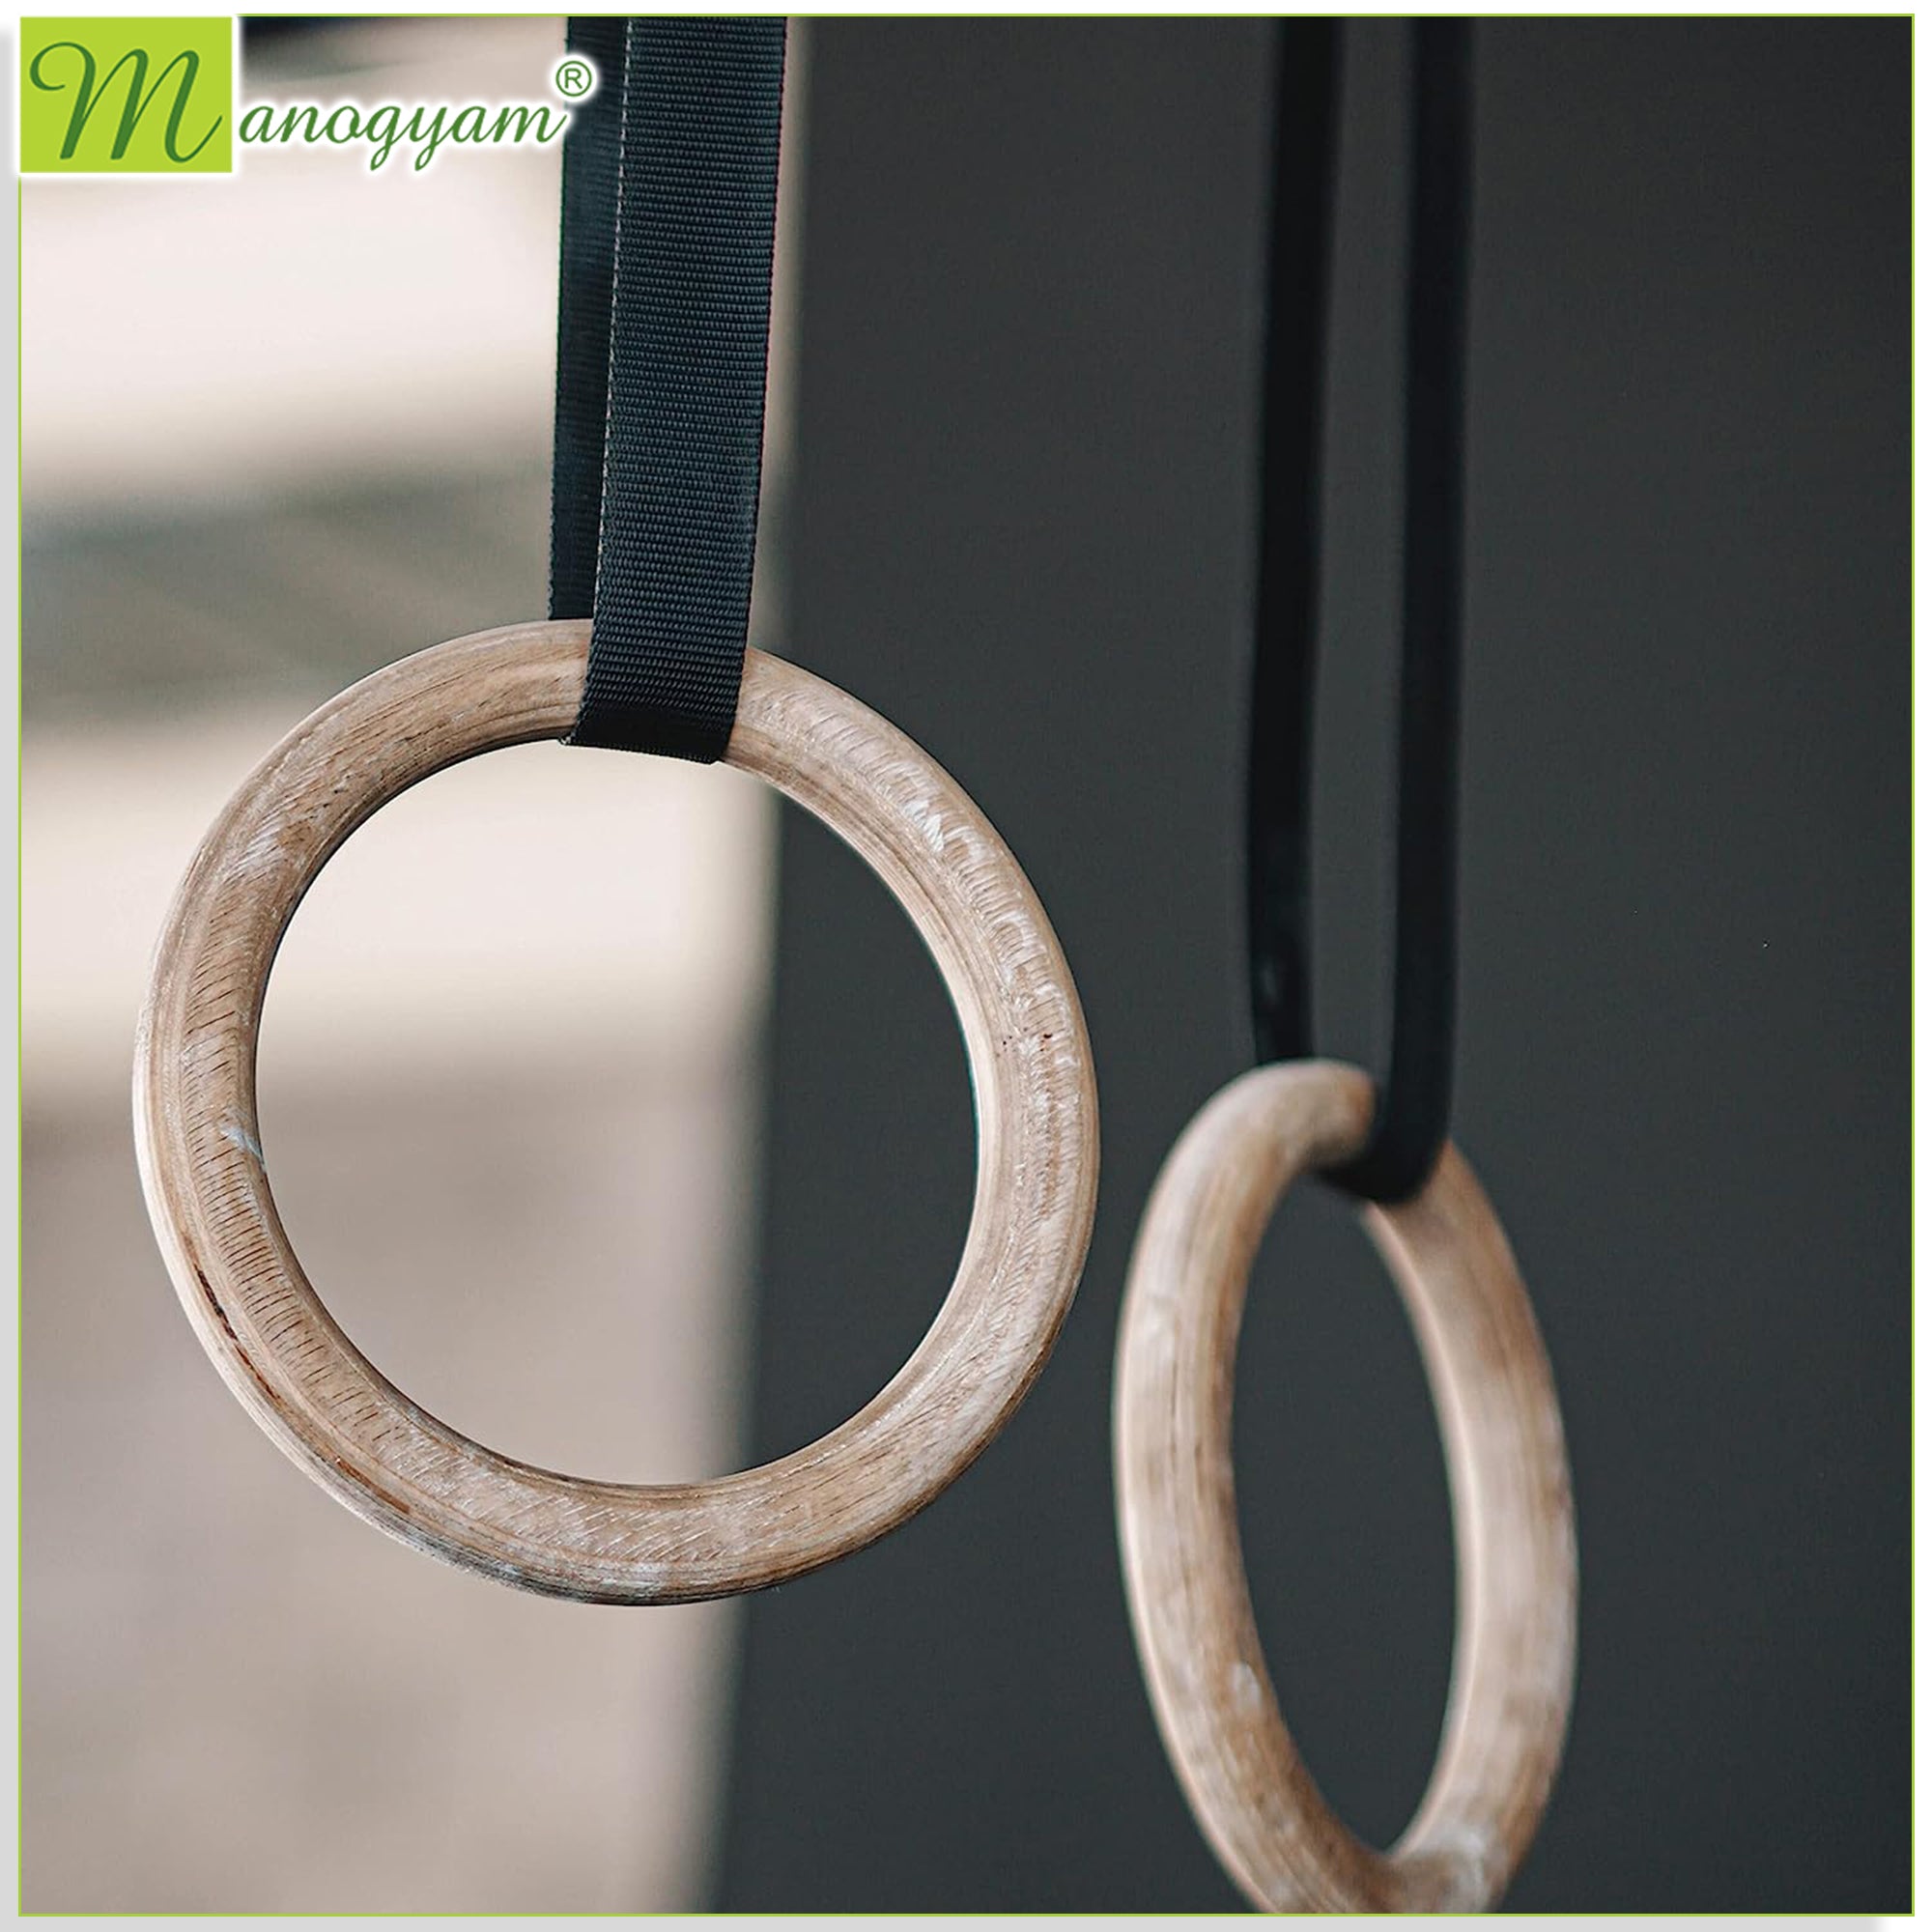 Manogyam Gymnastic Roman Rings - High Quality & Affordable ( Wood )